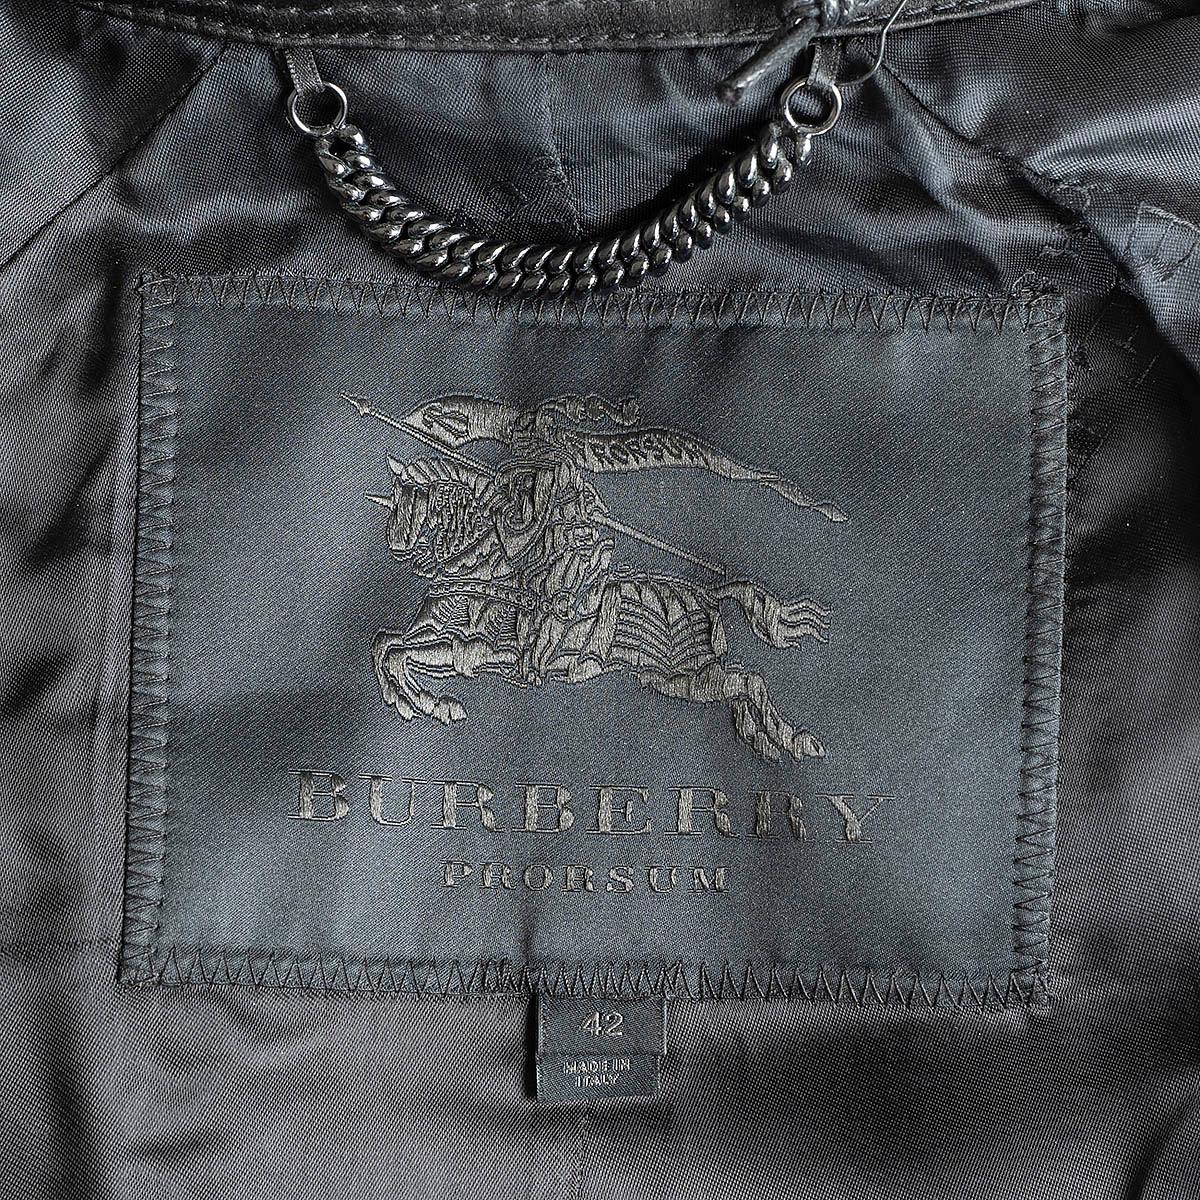 BURBERRY PRORSUM black 2013 DOUBLE DUCHESSE CAPED TRENCH Coat Jacket 42 M For Sale 4